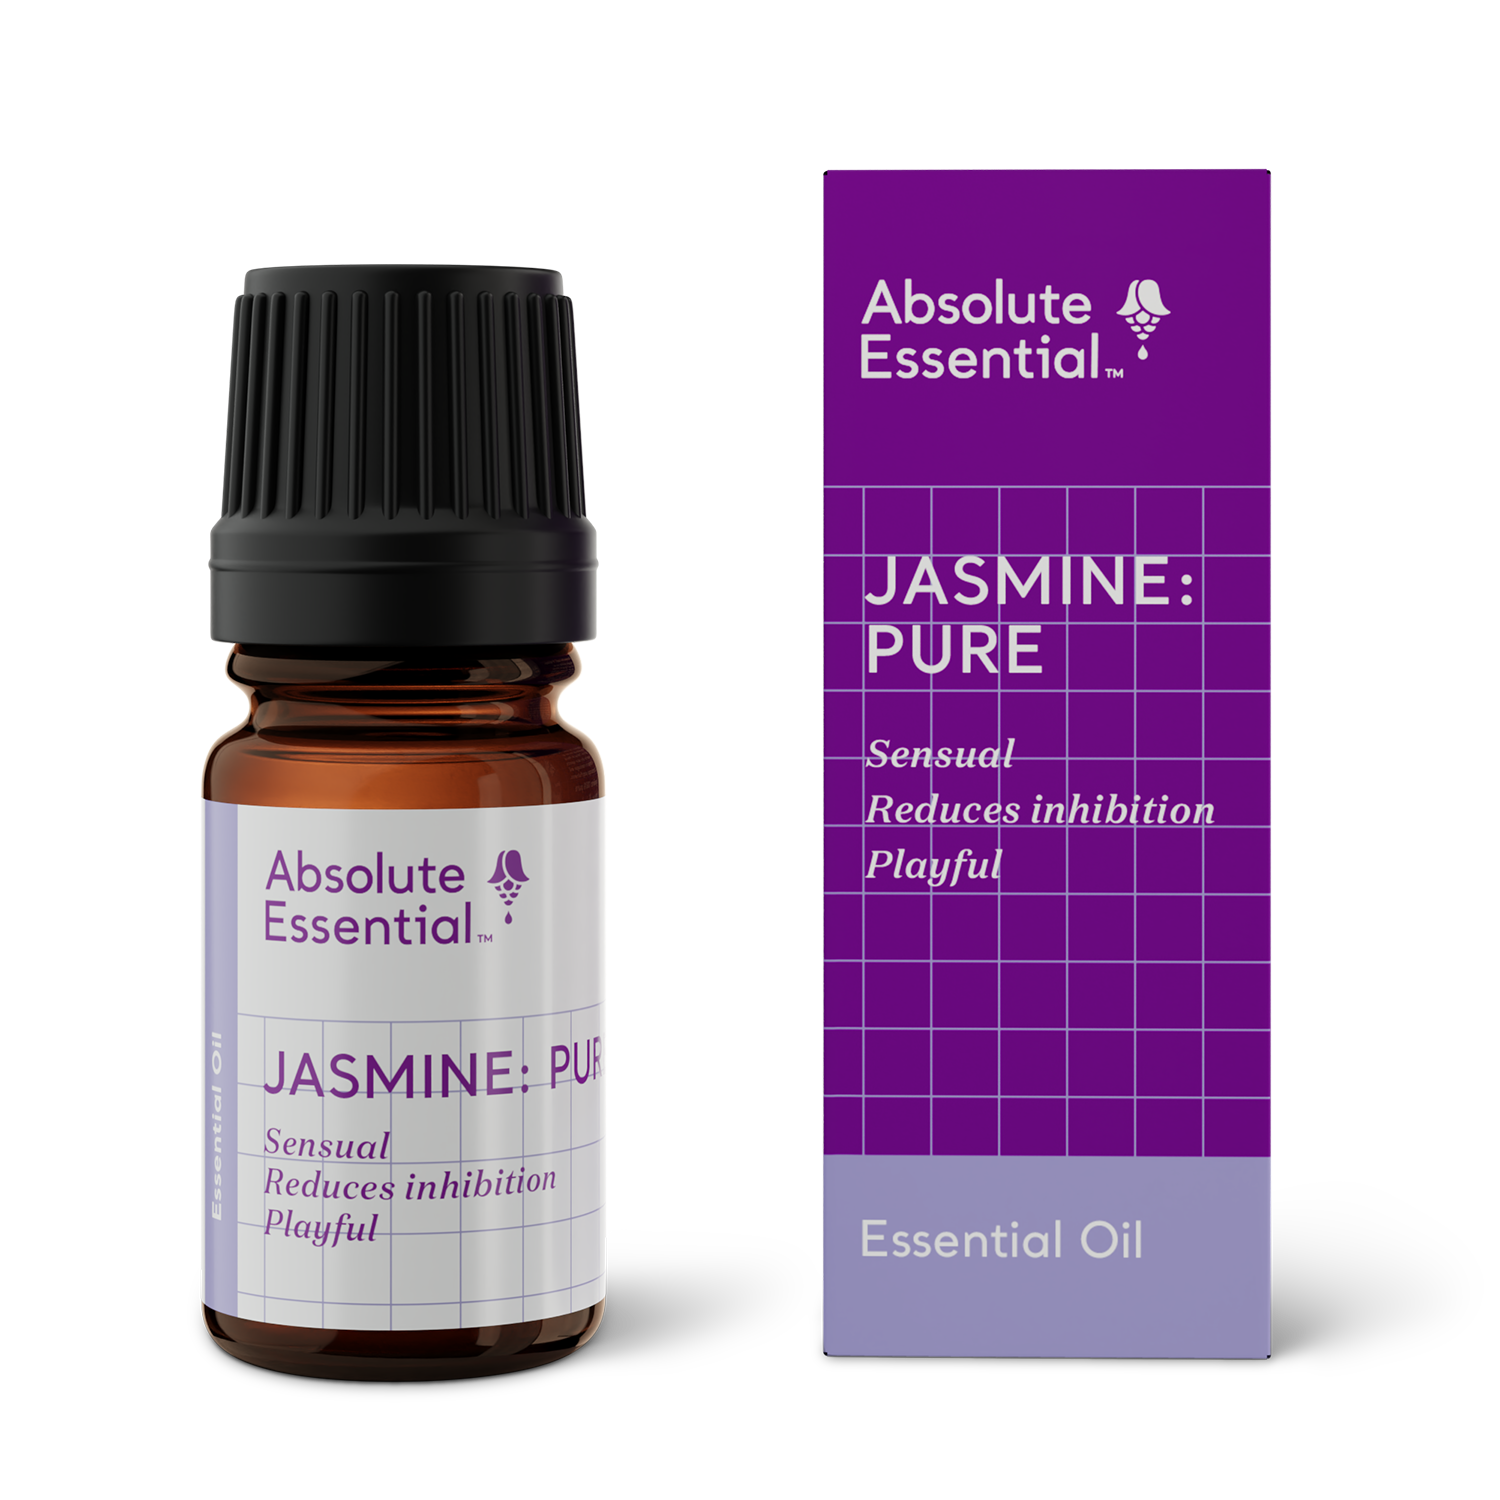 Jasmine: Pure Essential Oil